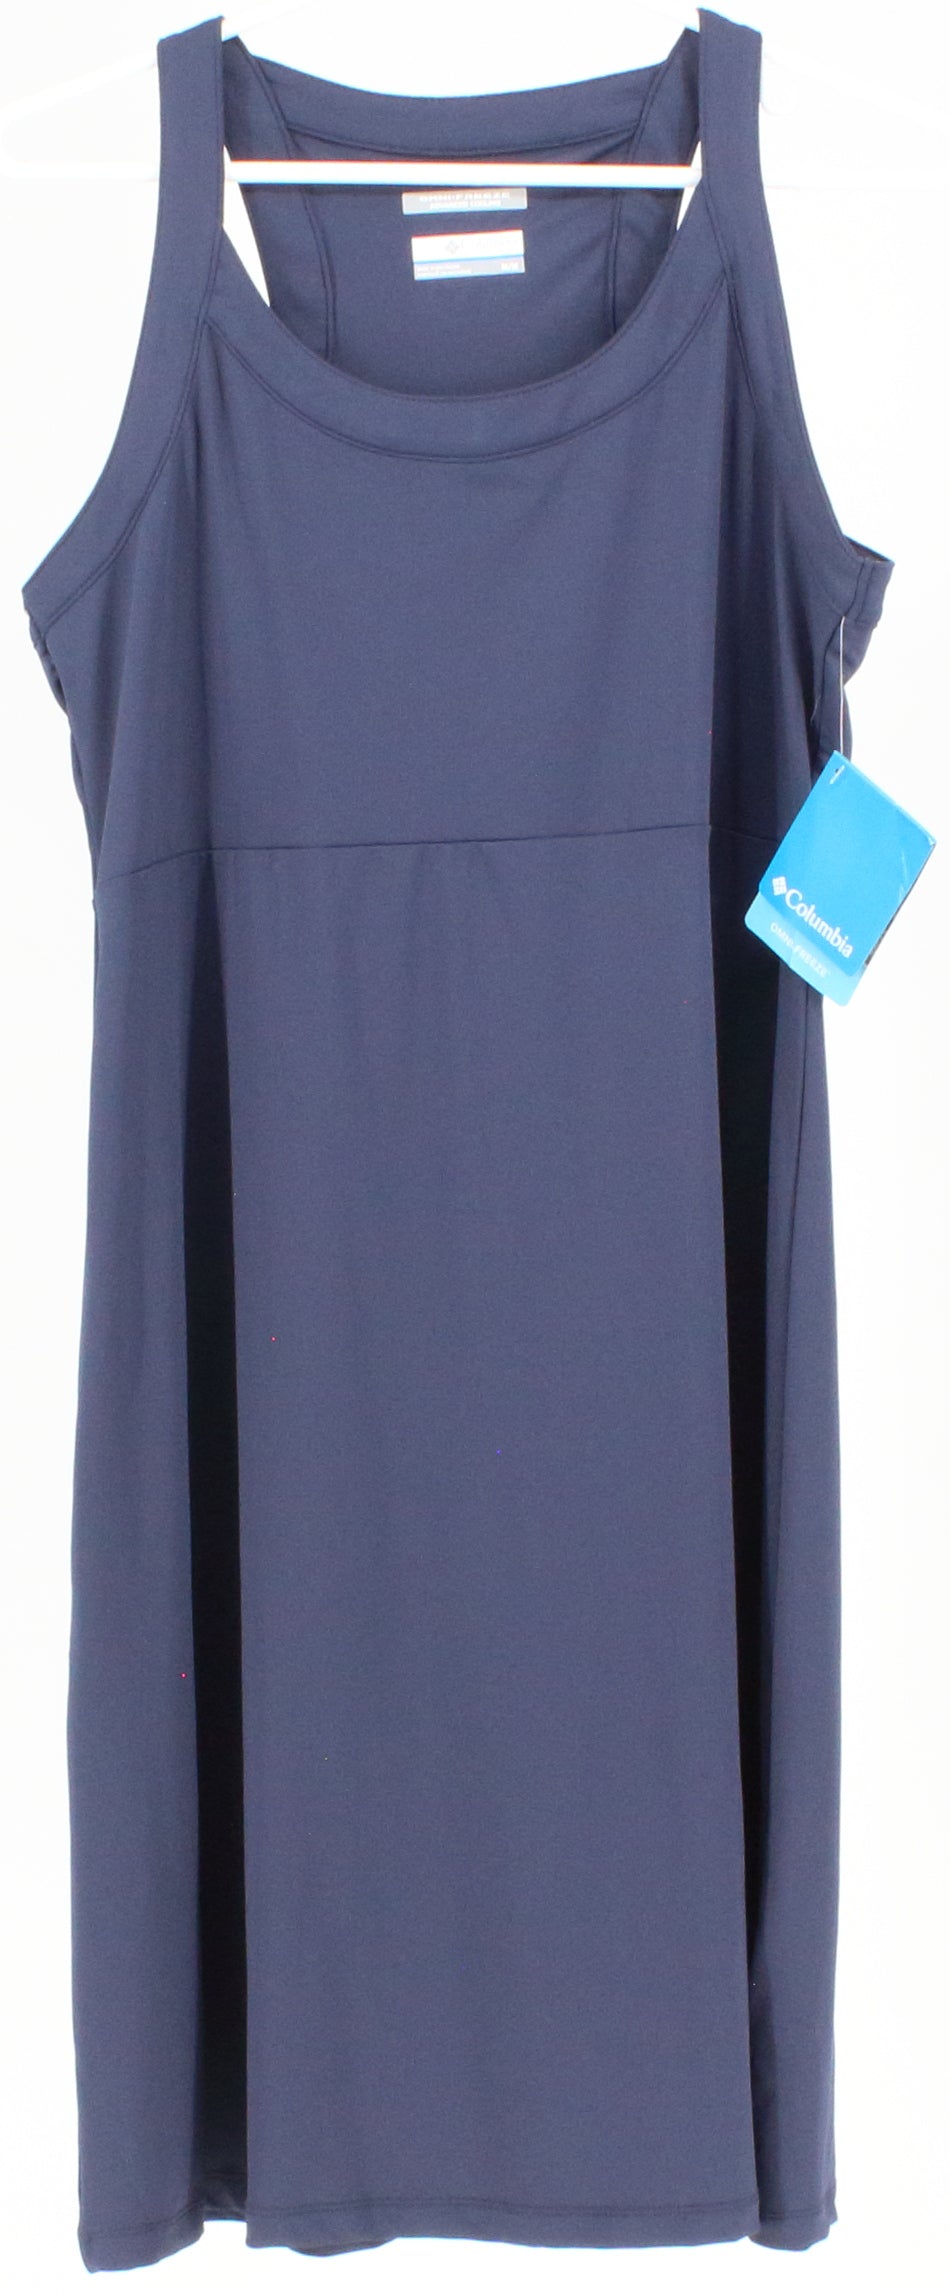 Columbia Navy Blue Omni-Freeze Advanced Cooling Sleeveless Dress